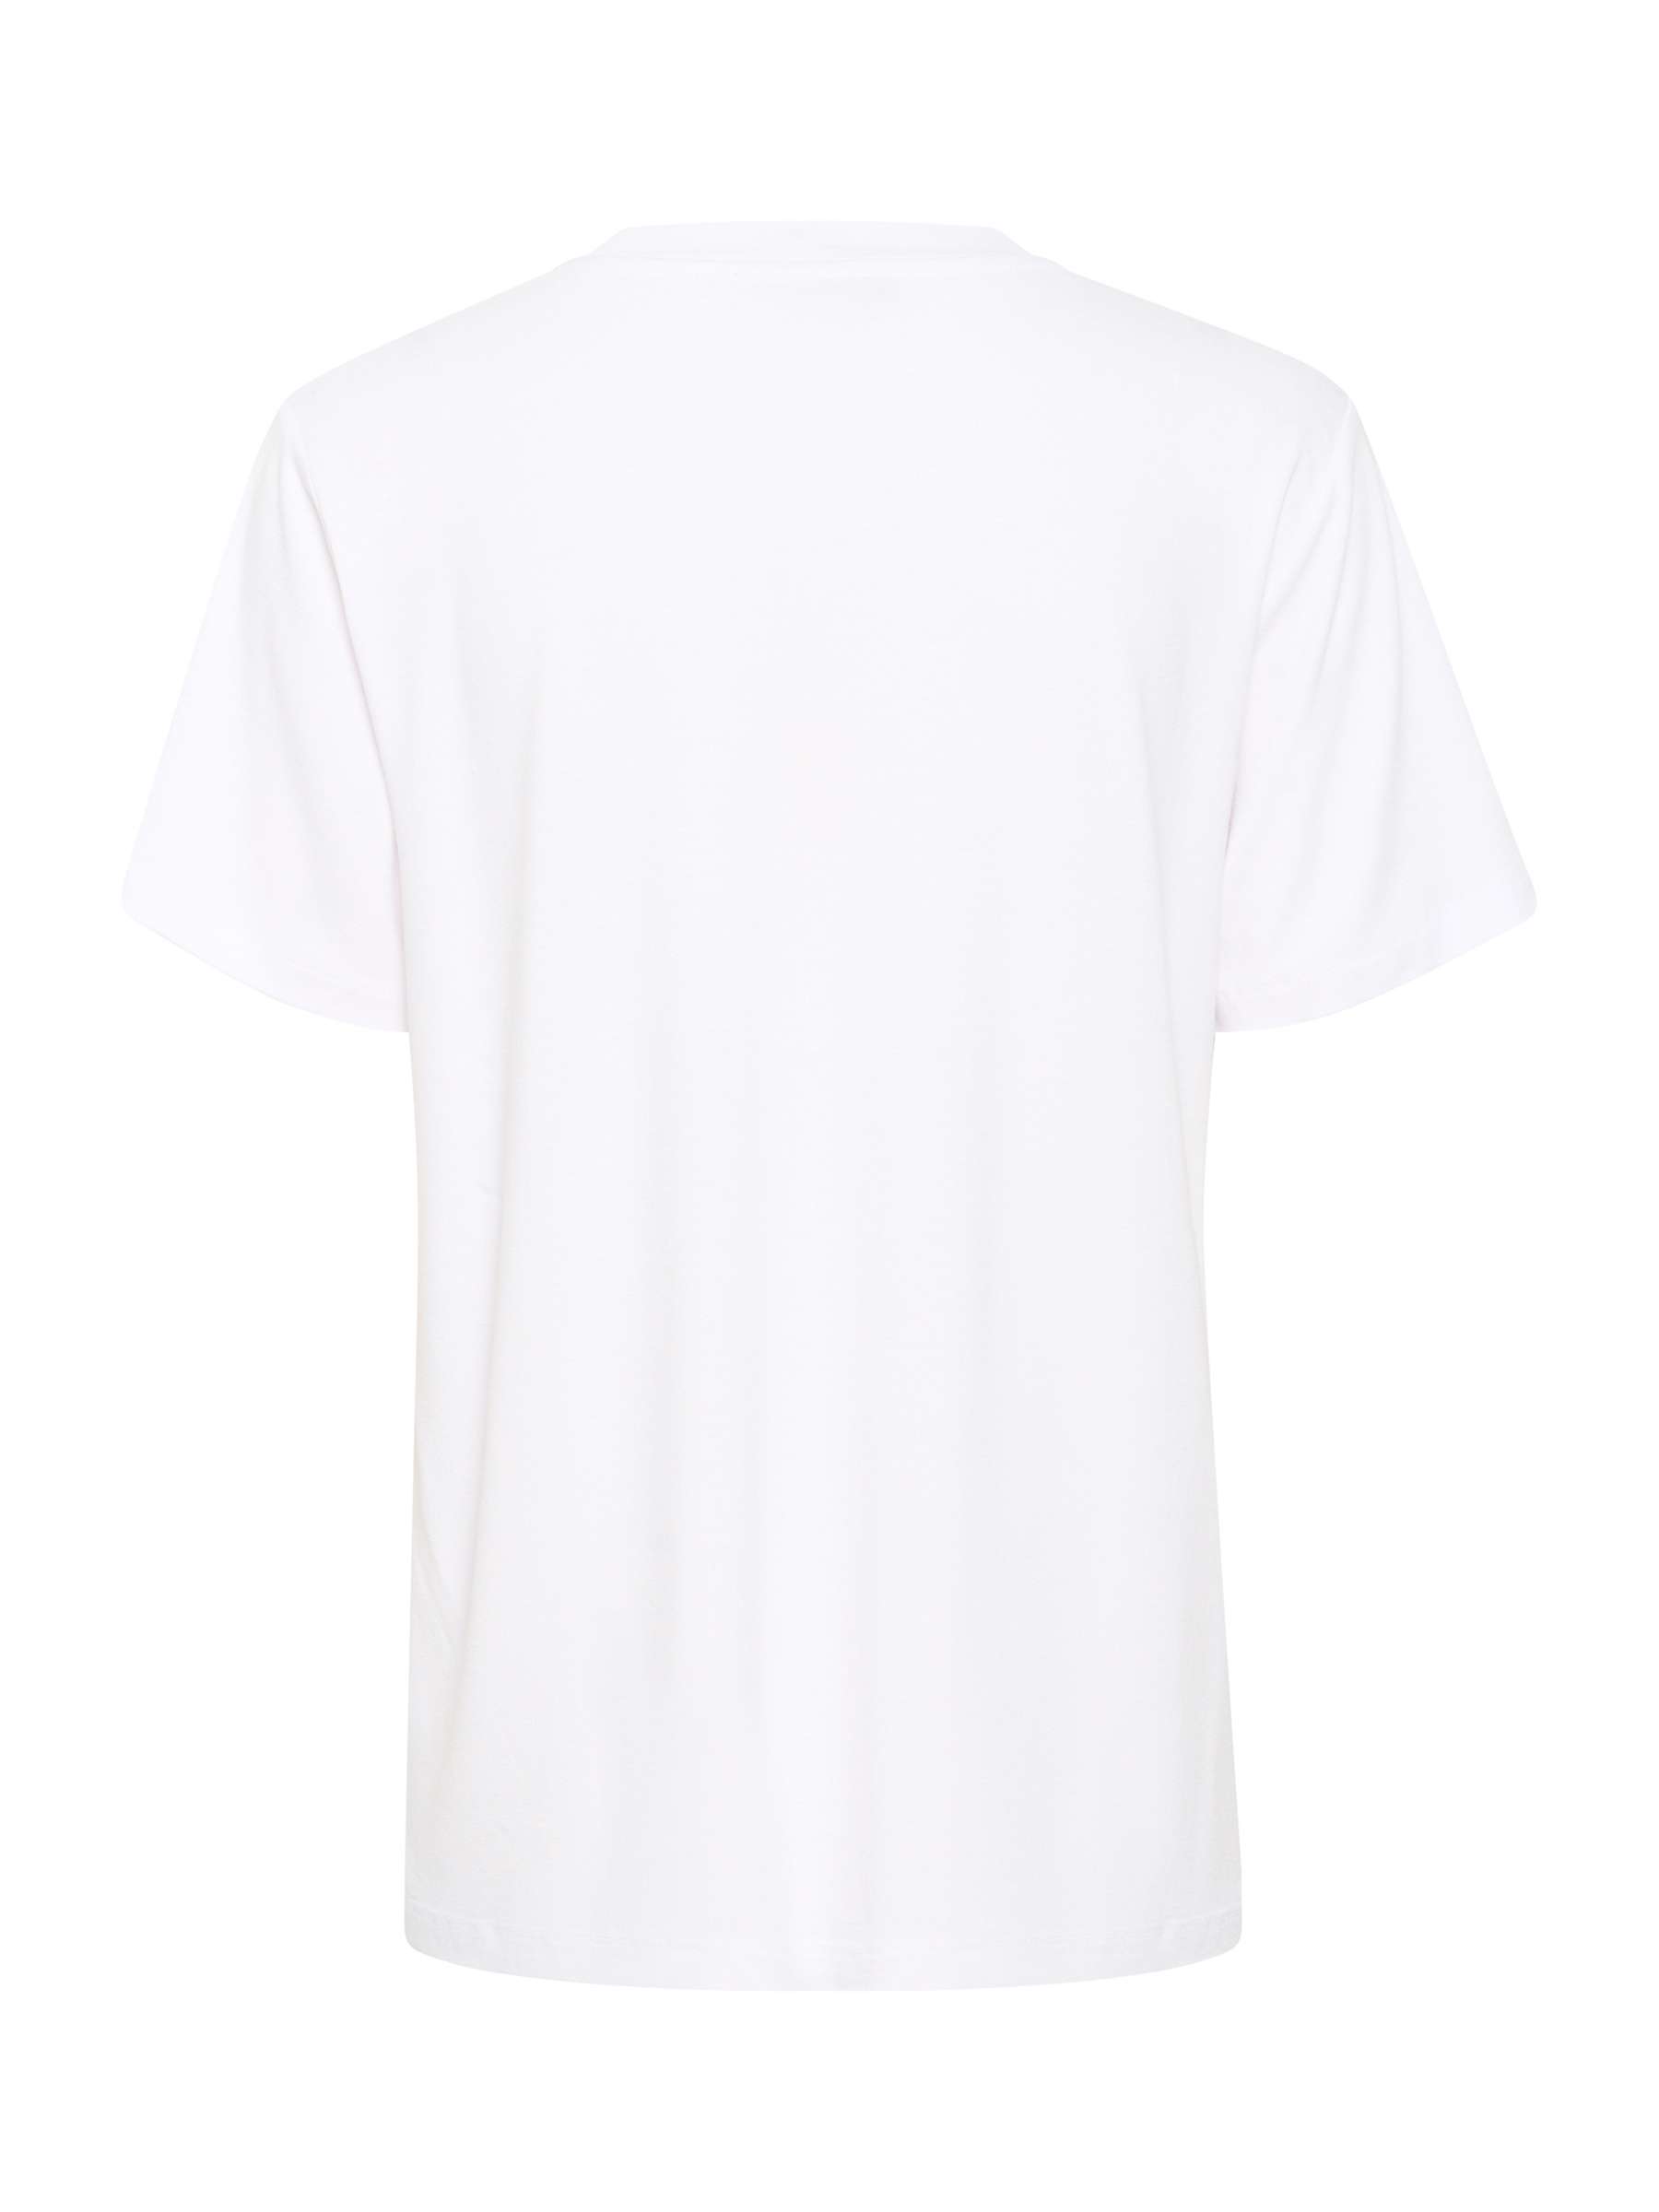 Buy KAFFE Elin Short Sleeve Graphic T-Shirt, White/Black Graphic Online at johnlewis.com